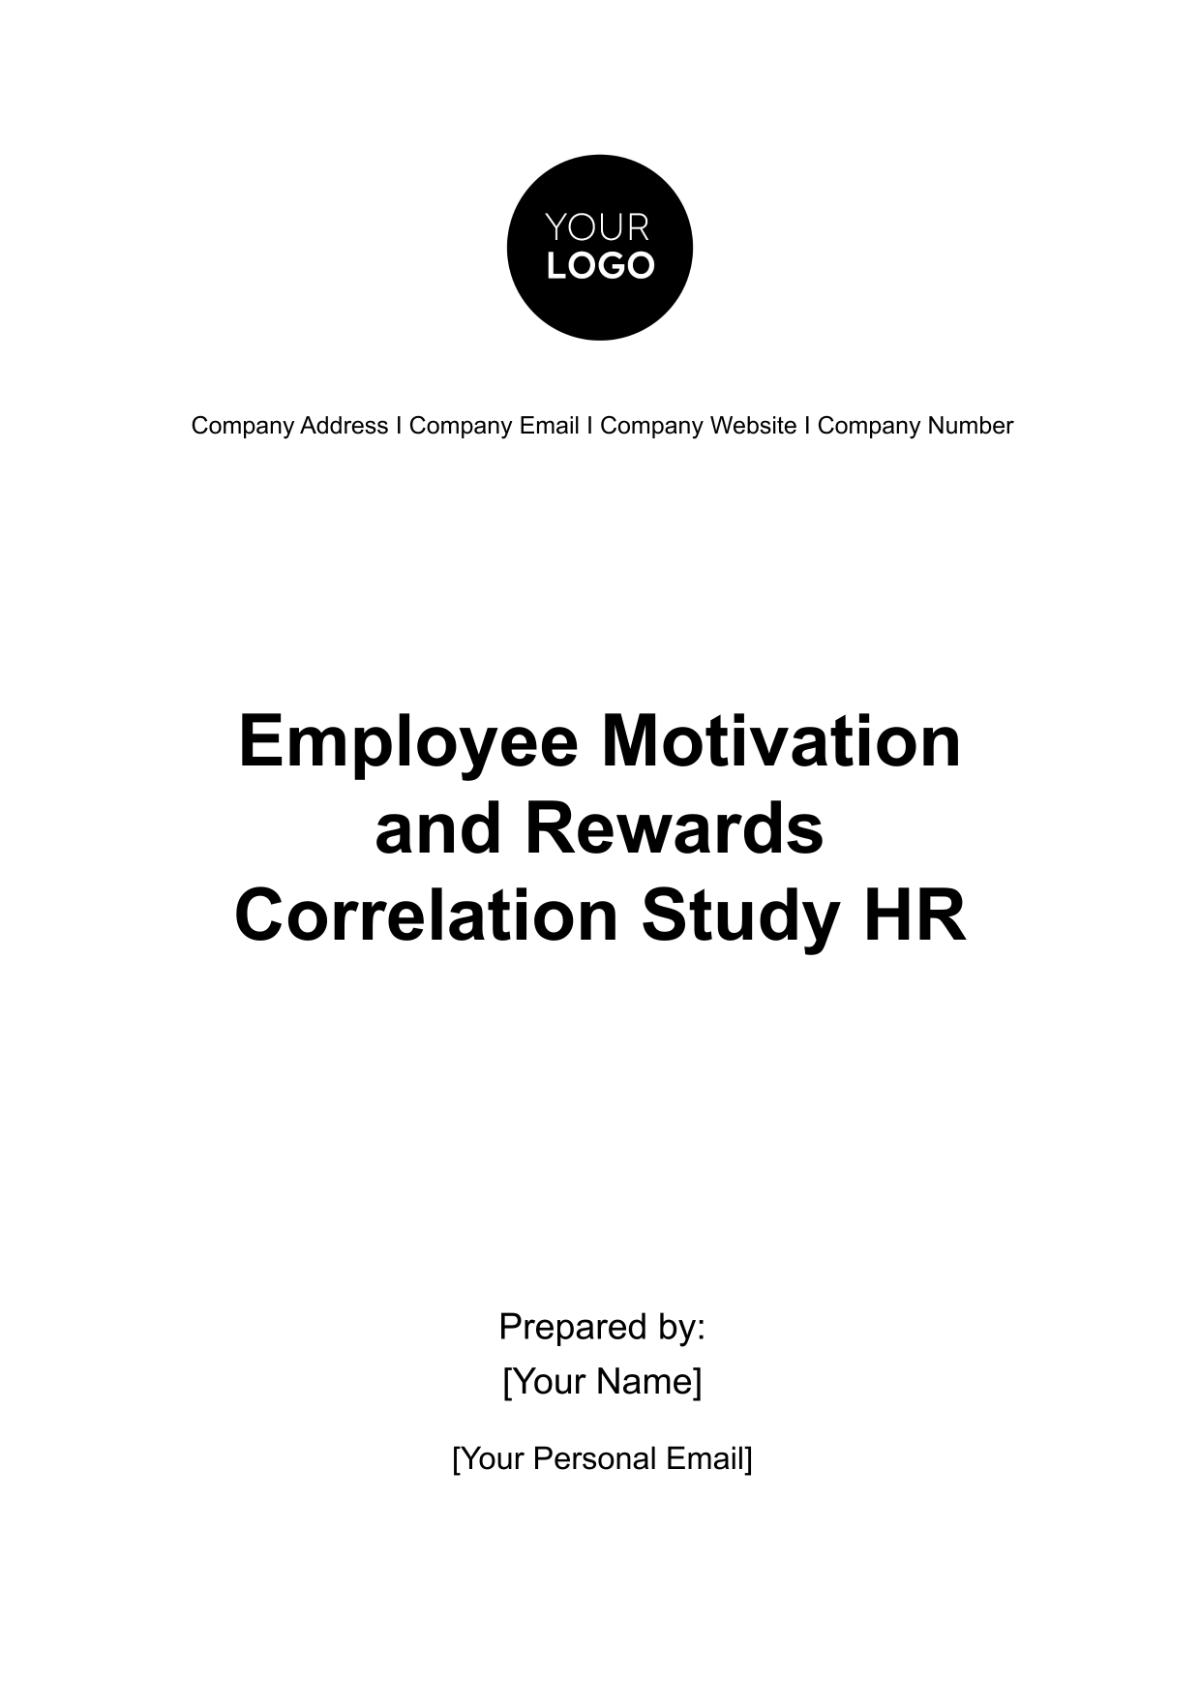 Employee Motivation and Rewards Correlation Study HR Template